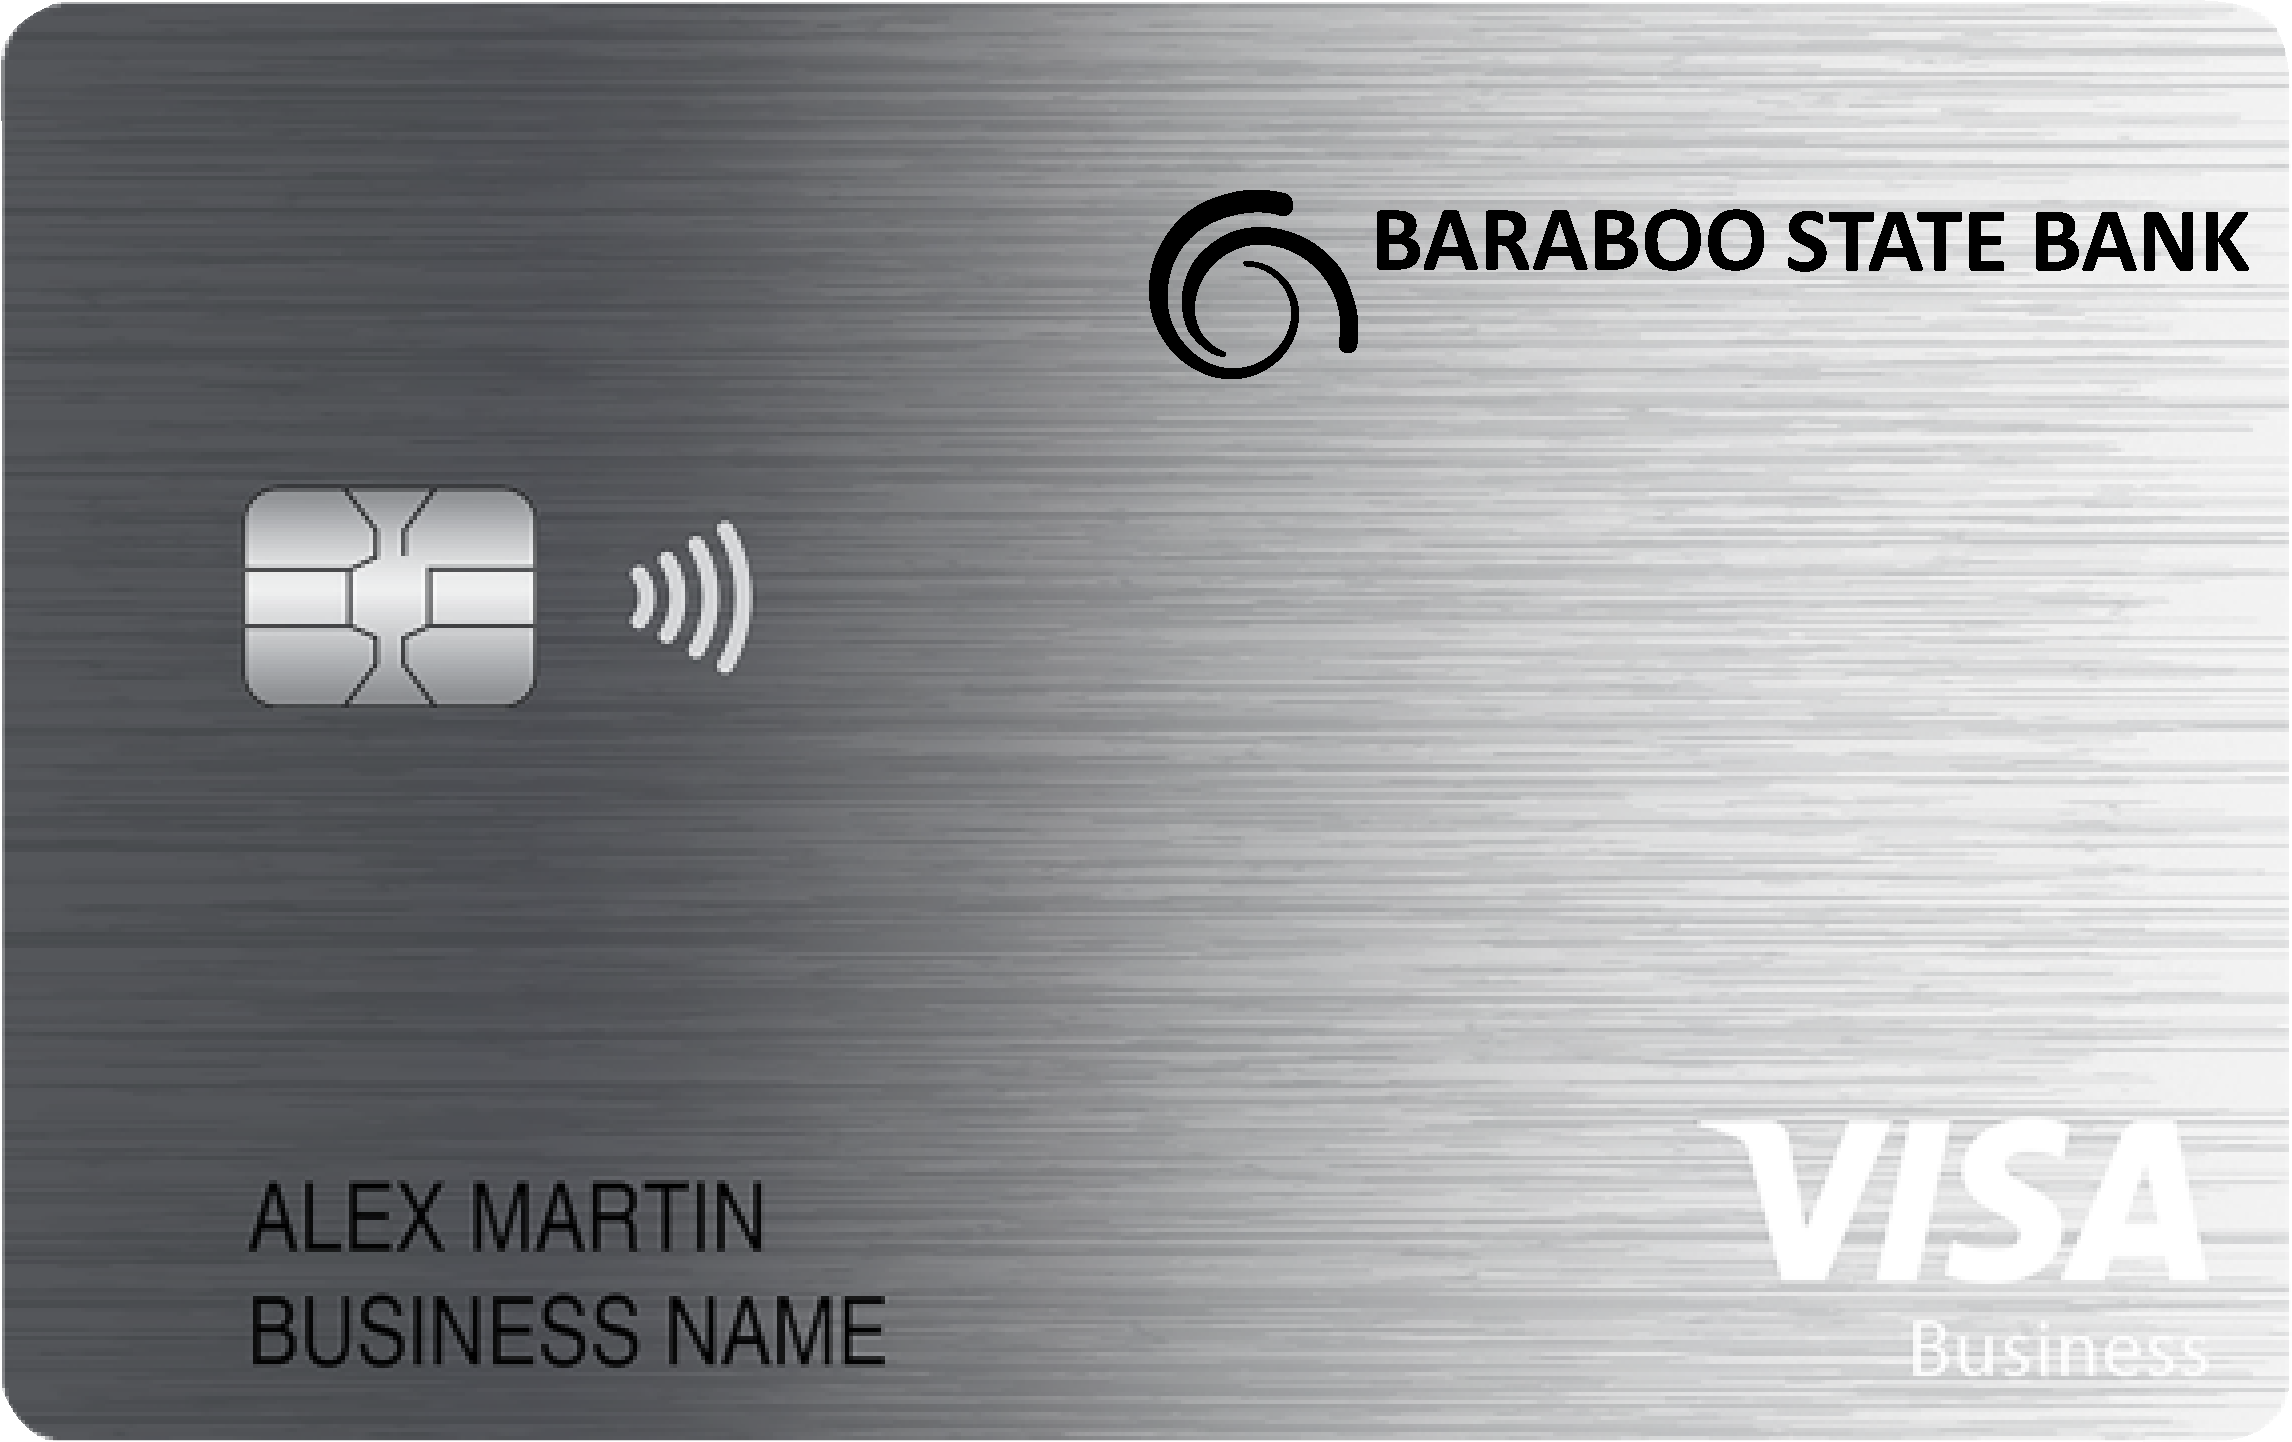 Baraboo State Bank Business Real Rewards Card